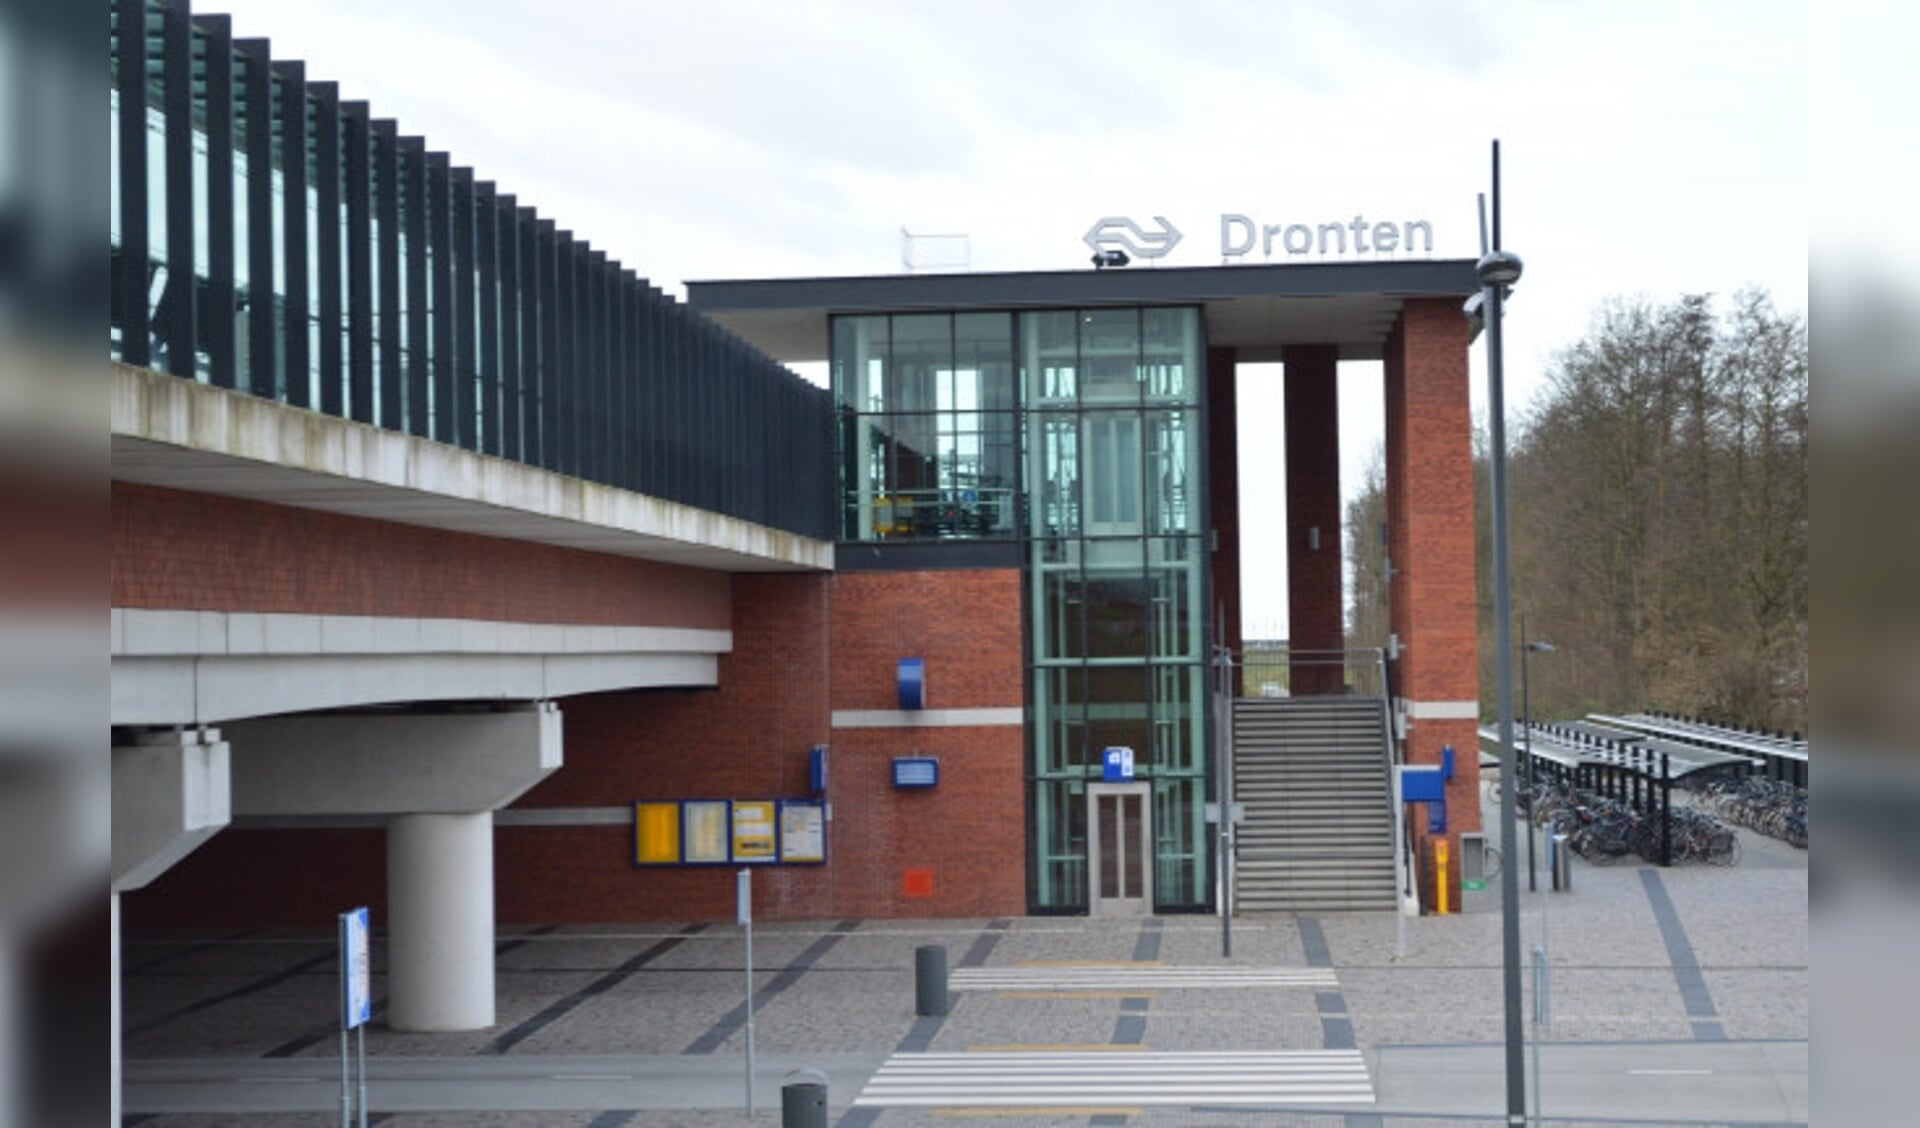  Station Dronten